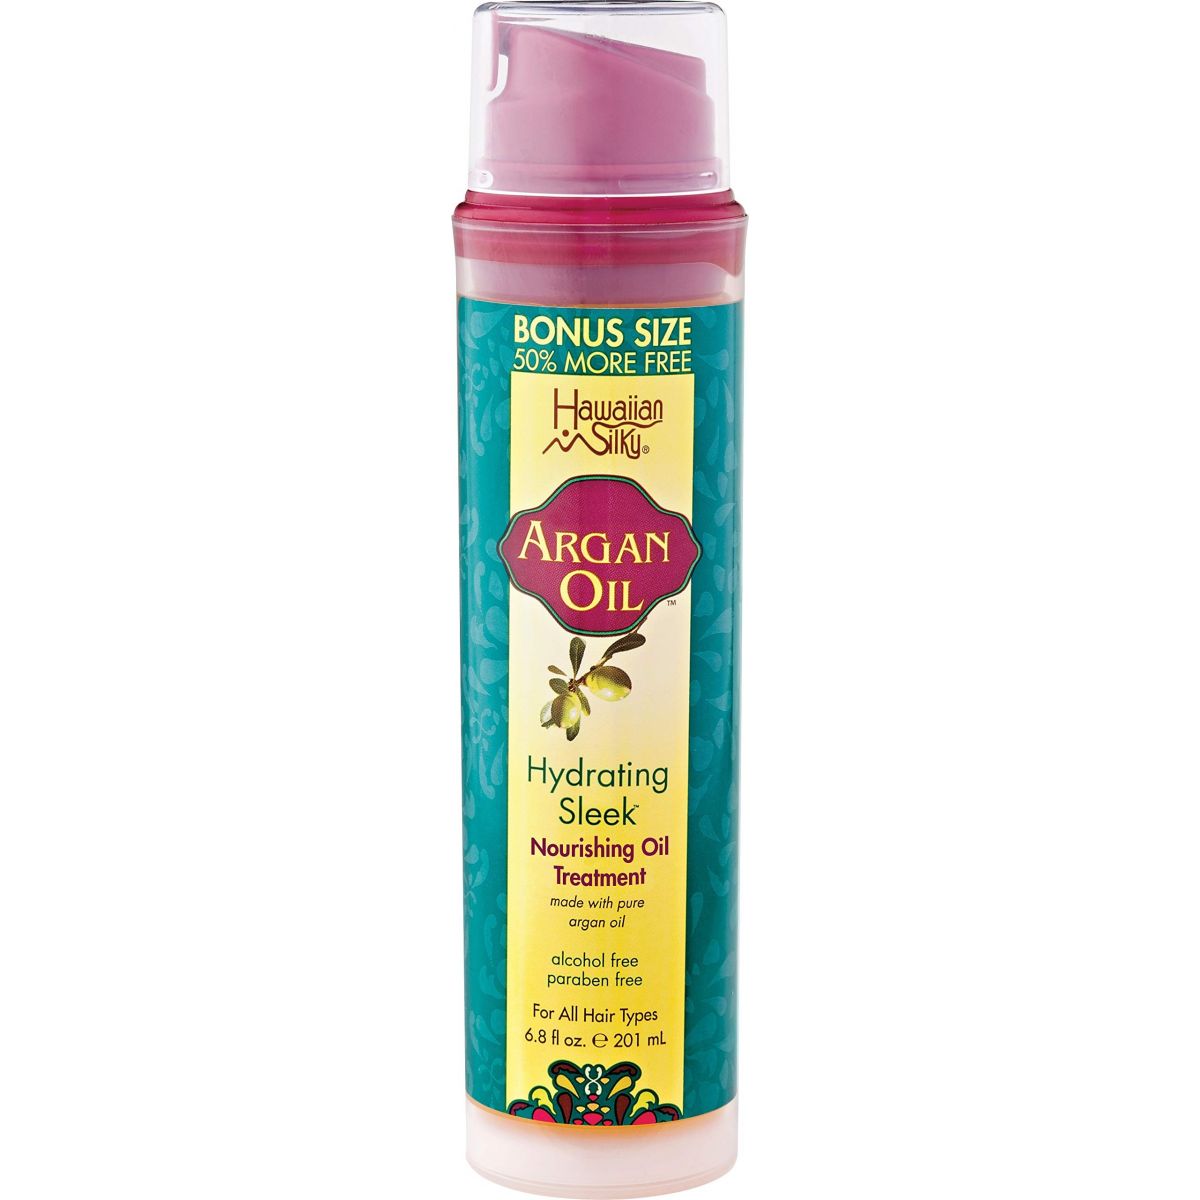 Hawaiian Silky Argan Oil Hydrating Sleek Healing Oil Treatment 200 ml